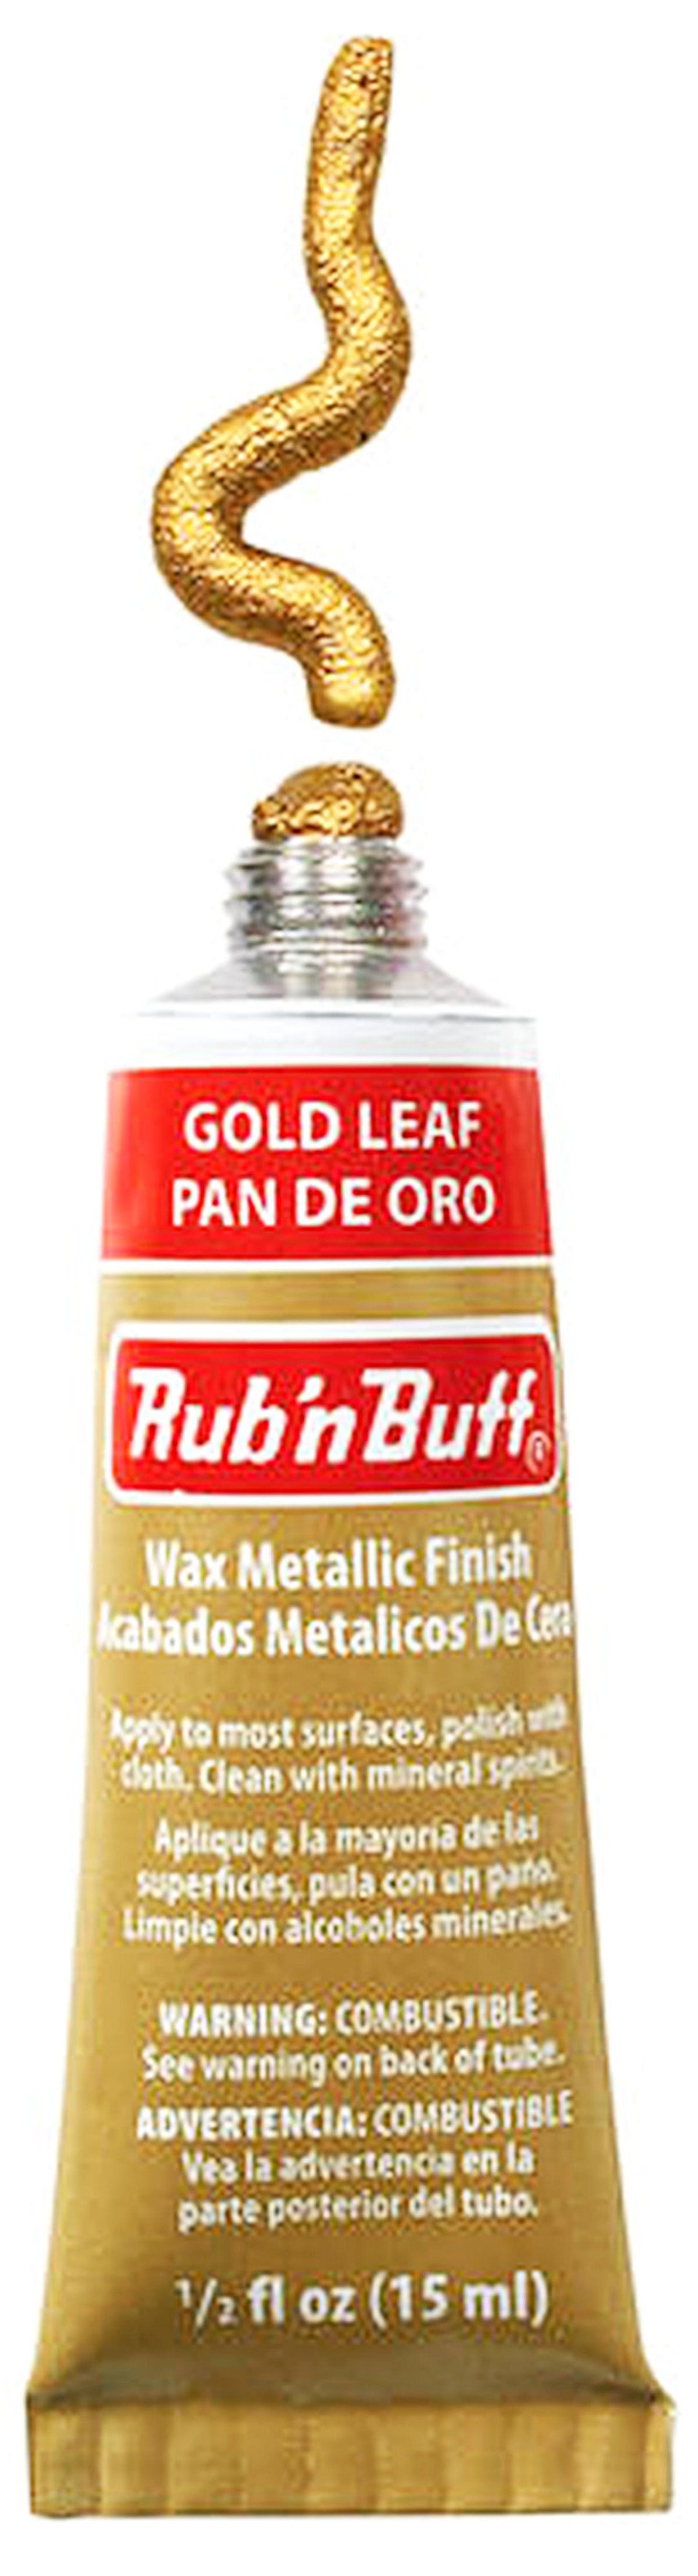 GOLD LEAF Rub 'n Buff Metallic Carnuba Wax Finish Repair Refinish Gilding  Touch up Paste Antiques Furniture Frames Metal N Wood AMACO 76361A 